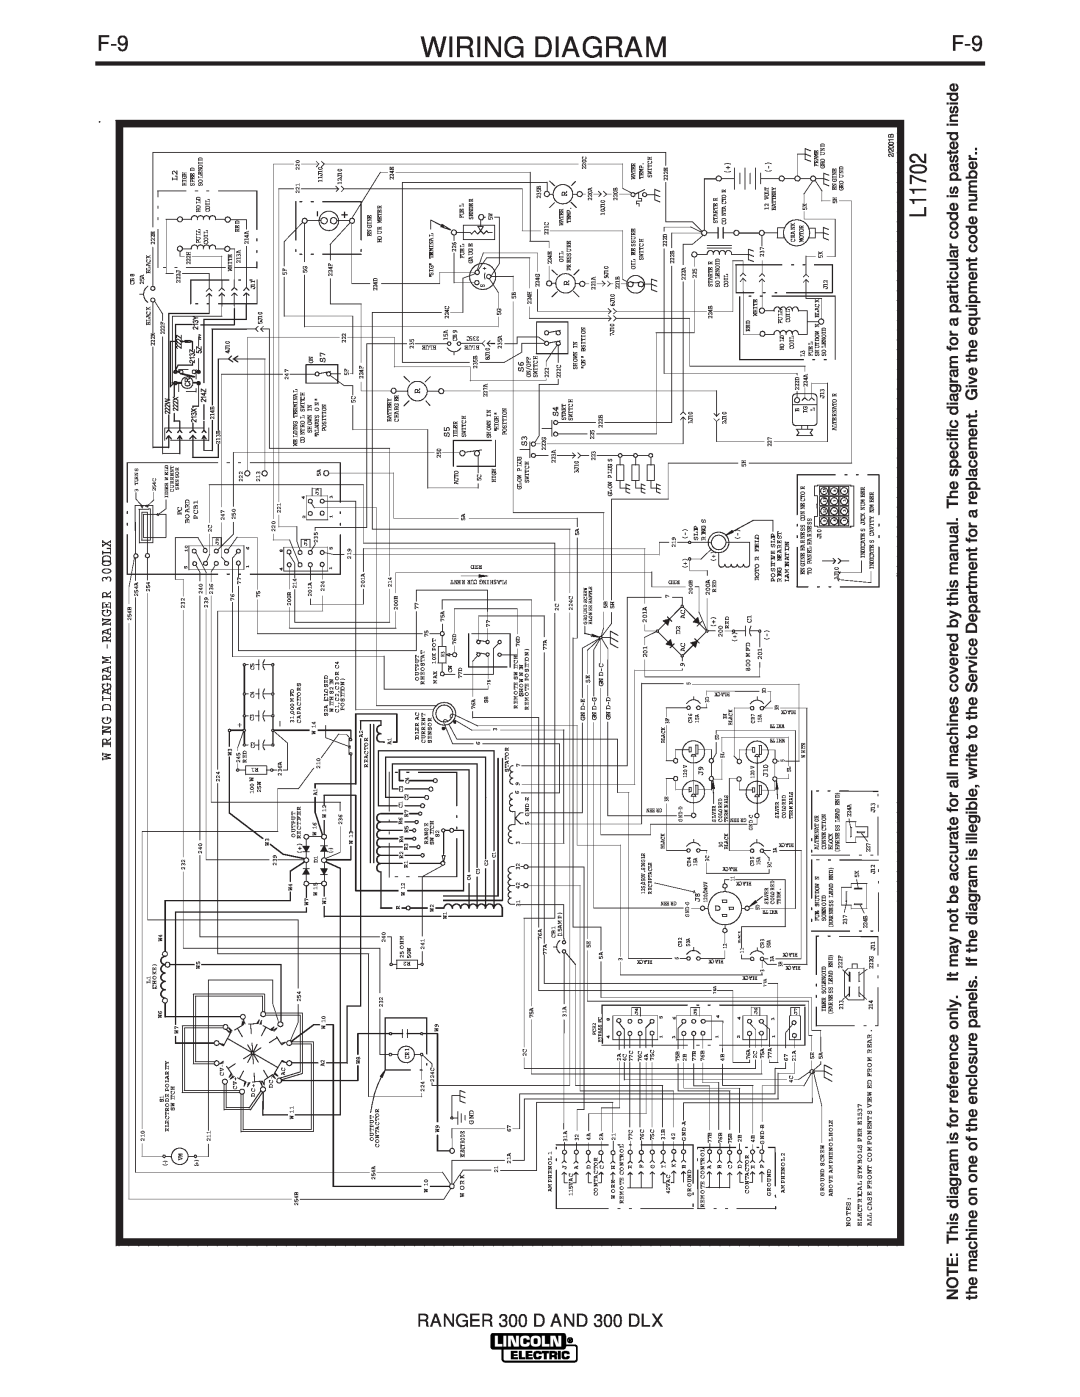 Lincoln Electric 300 DLX manual L11702, W IRING DIAG RA M -RANGE R 300DLX 